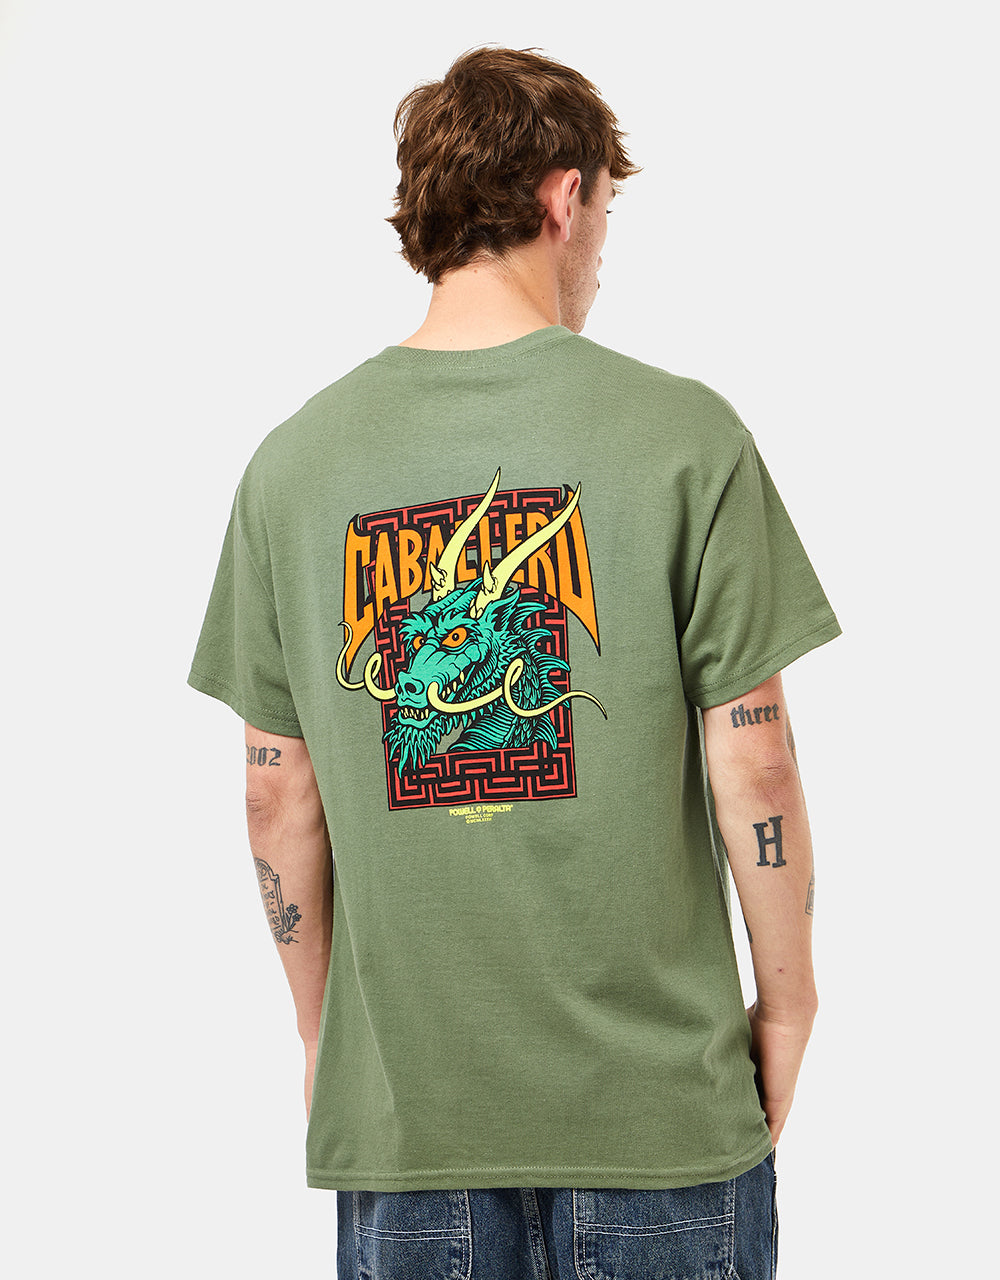 Powell Peralta Caballero Street Dragon T-Shirt - Military Green